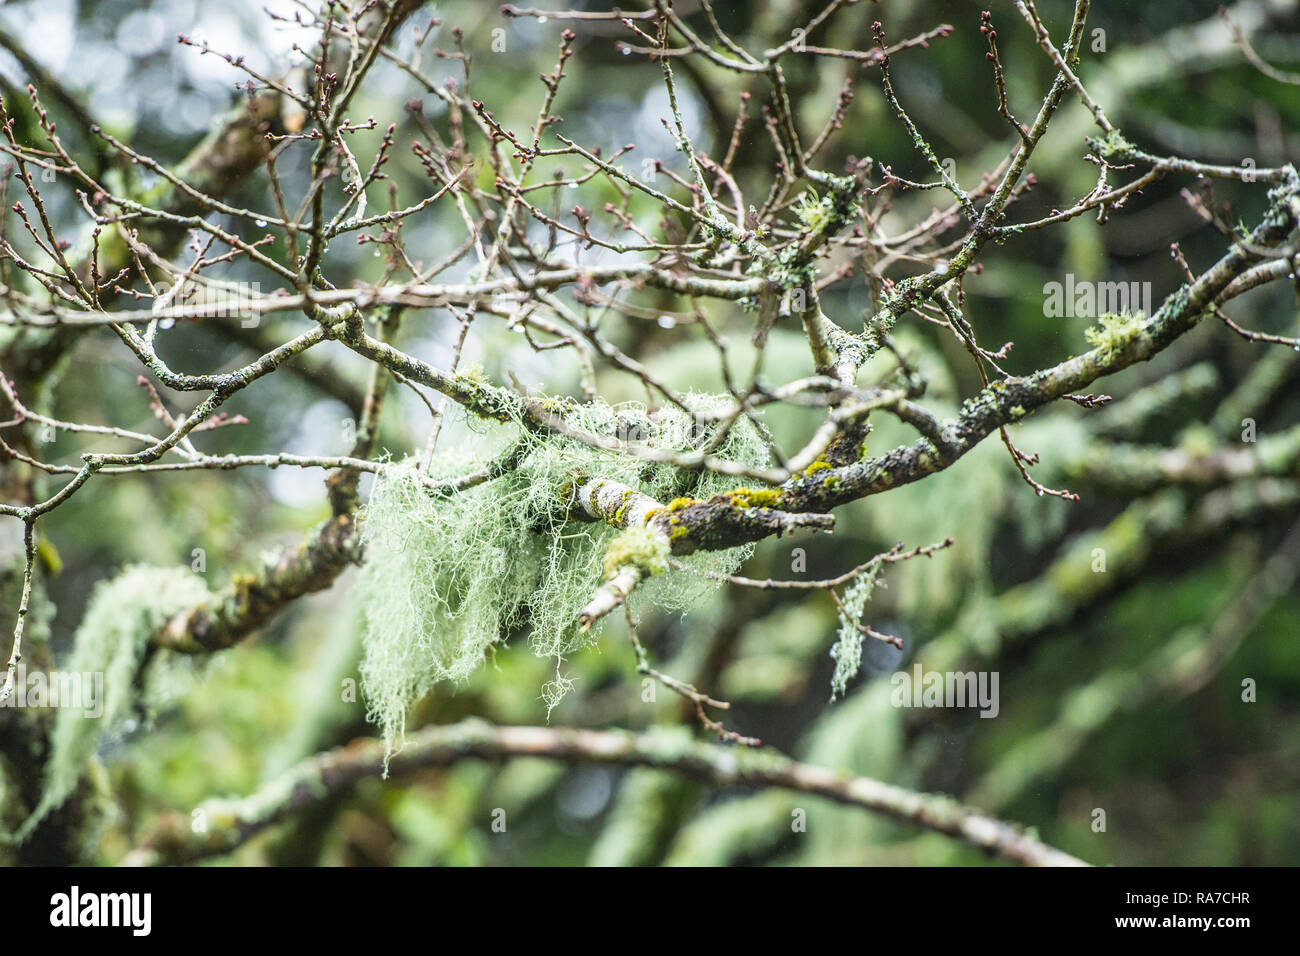 Usnea subfloridana lichen g on trees in winter Stock Photo